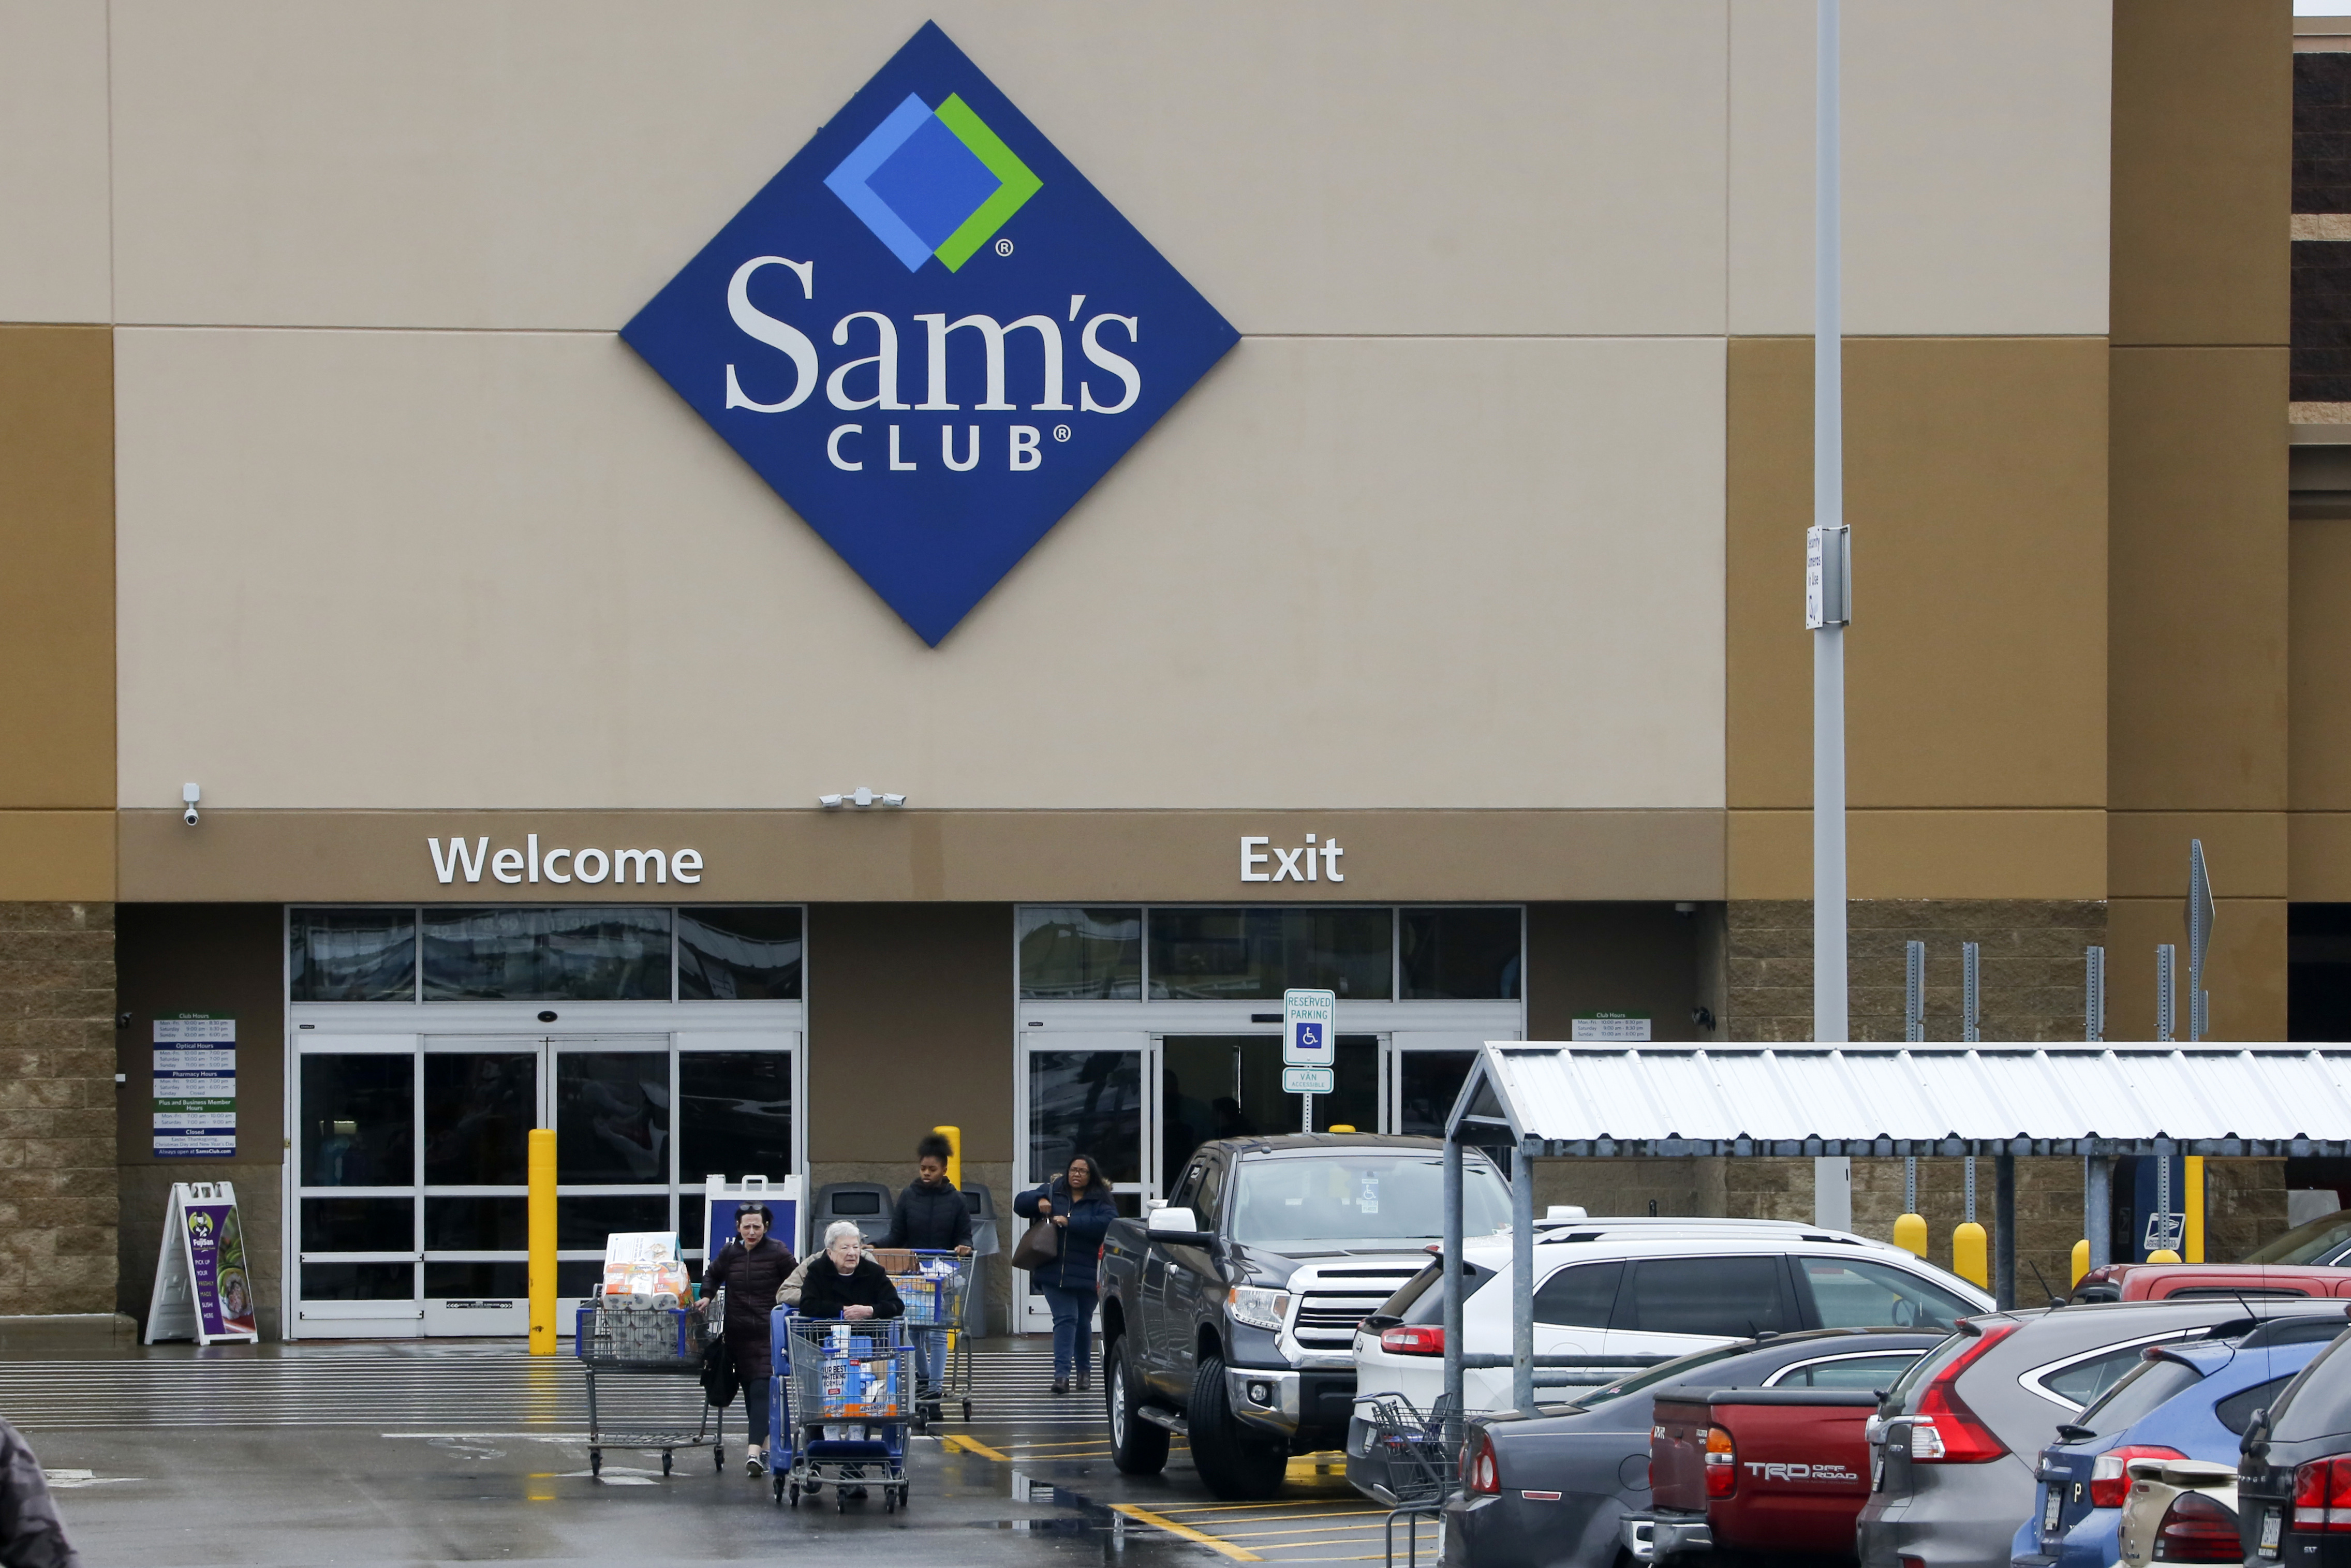 Sam's Club offering $8 memberships 